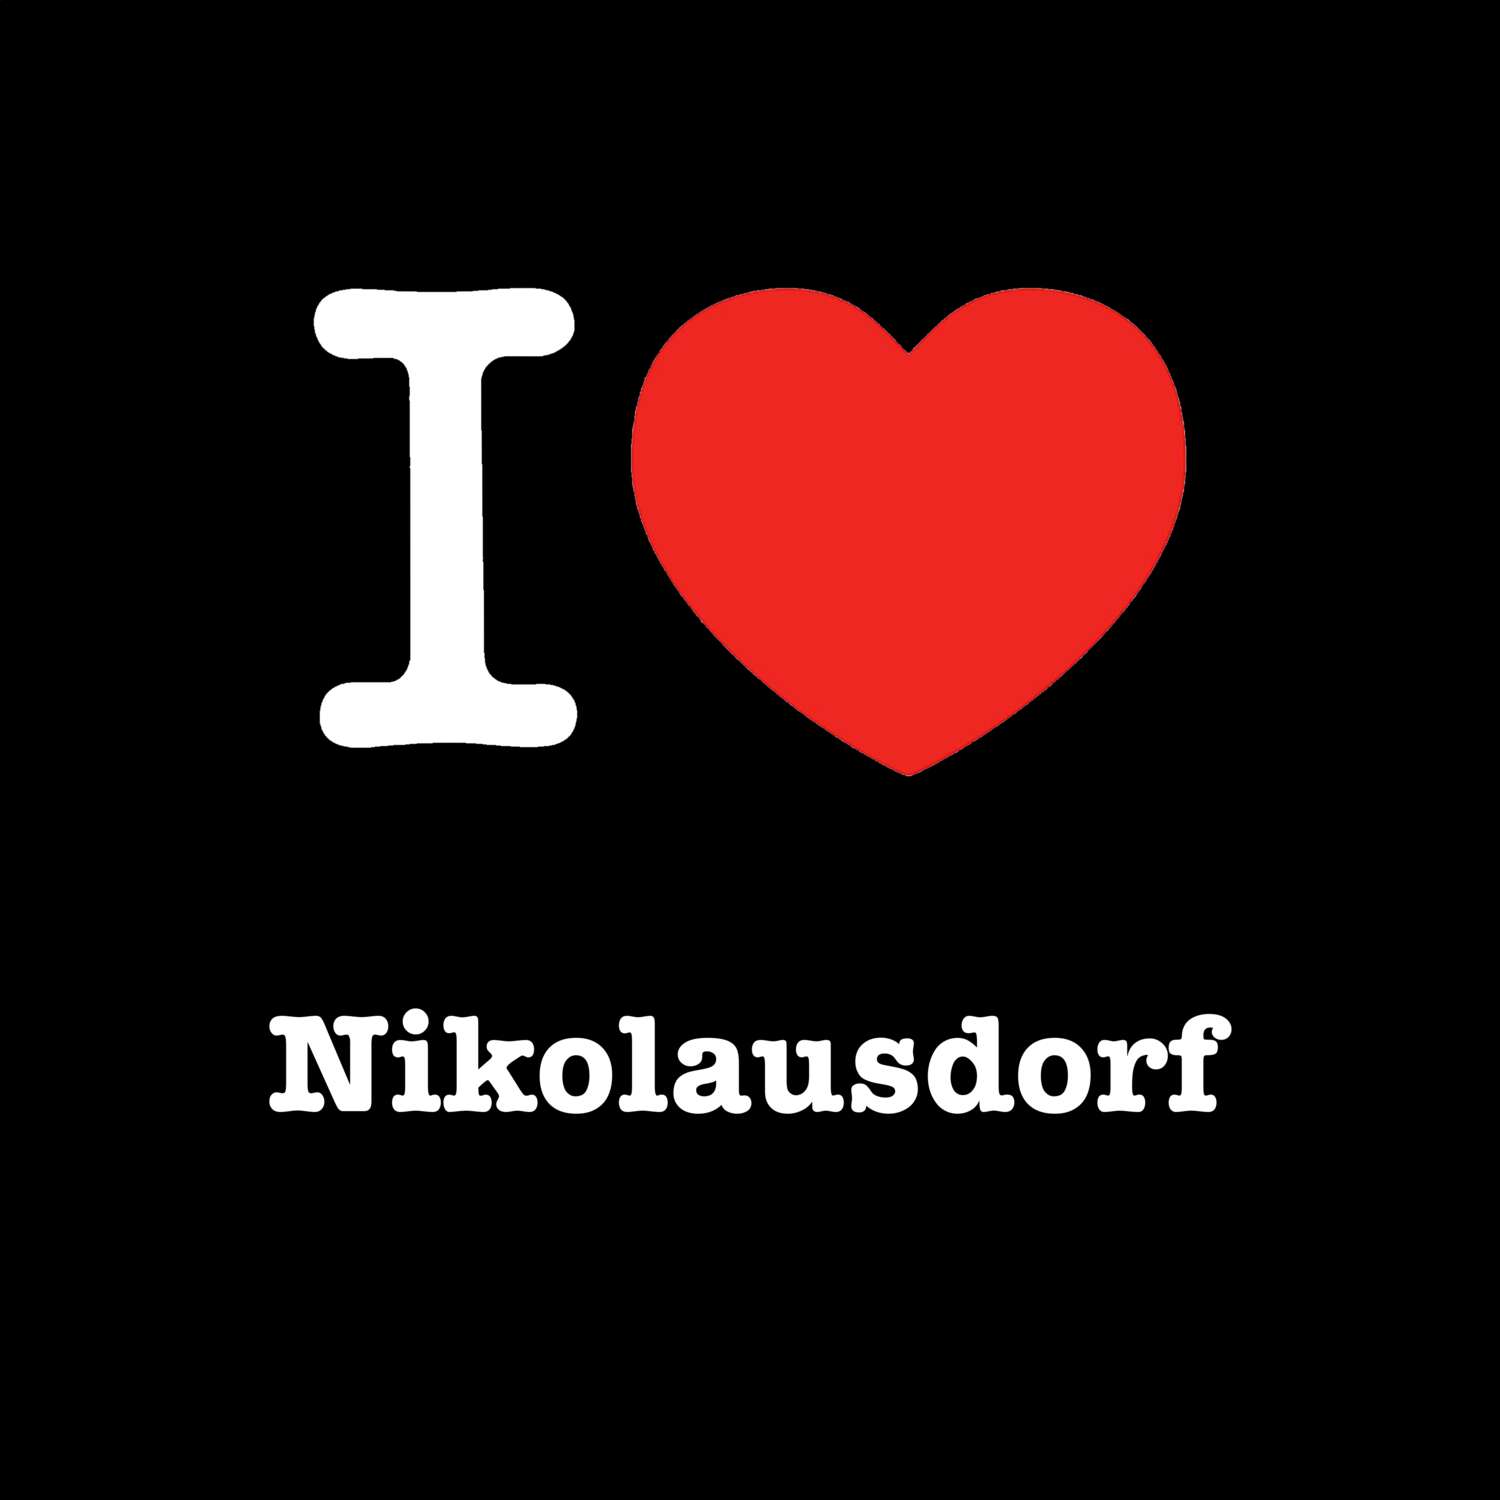 Nikolausdorf T-Shirt »I love«